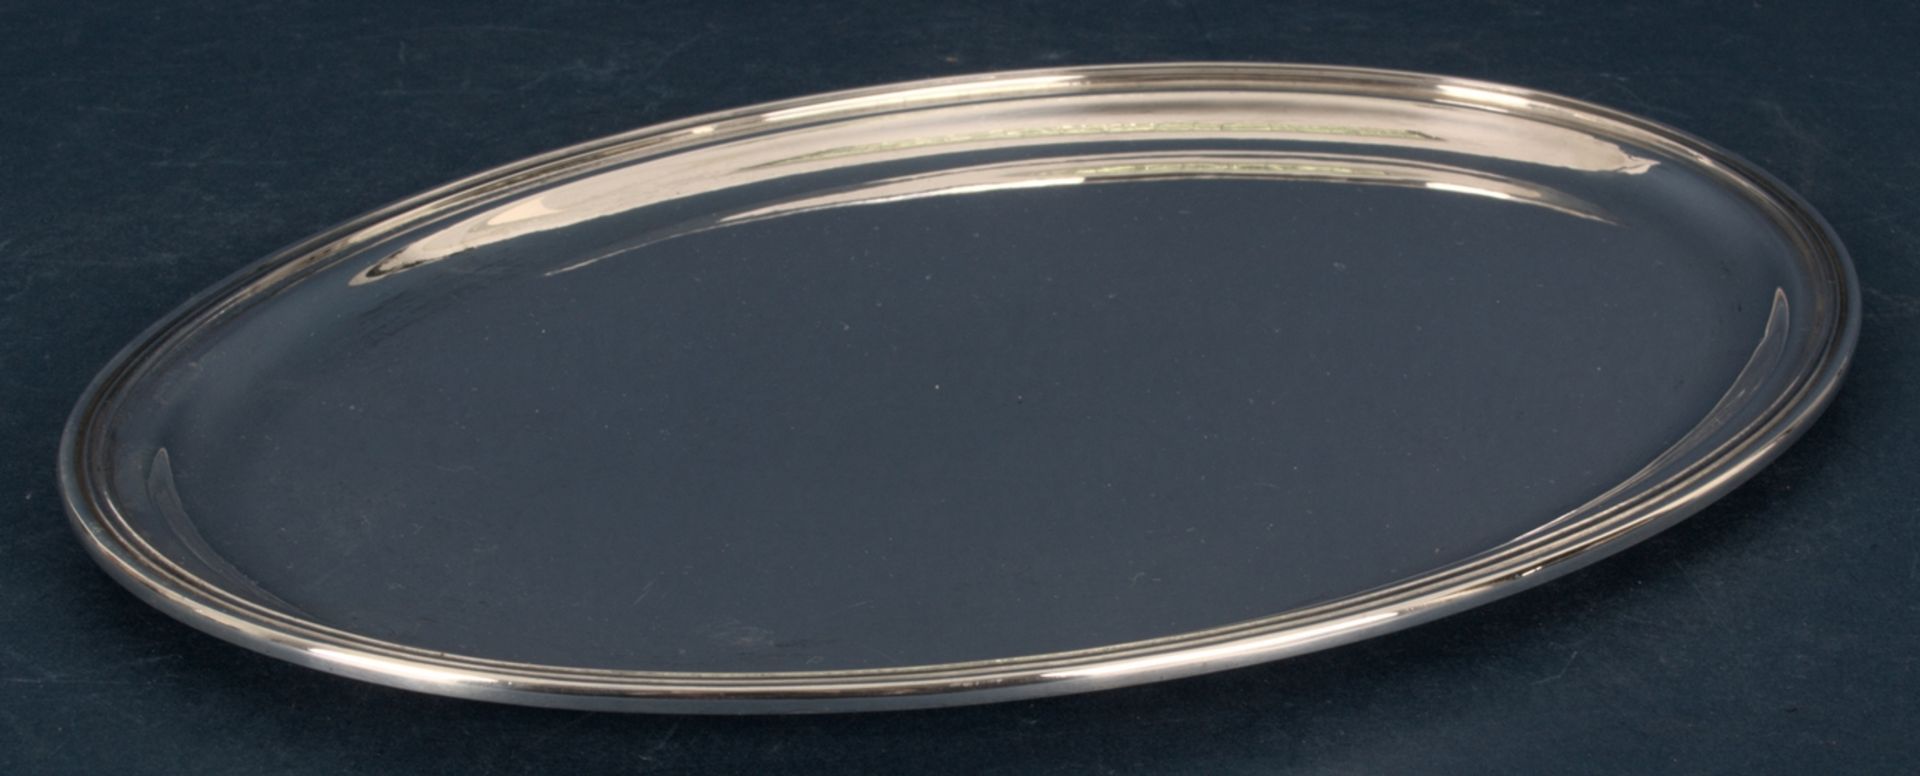 Ovales Tablett/Platte, 800er Silber, ca. 29,5 x 21 cm, Mitte 20. Jhd., ca. 381 gr.